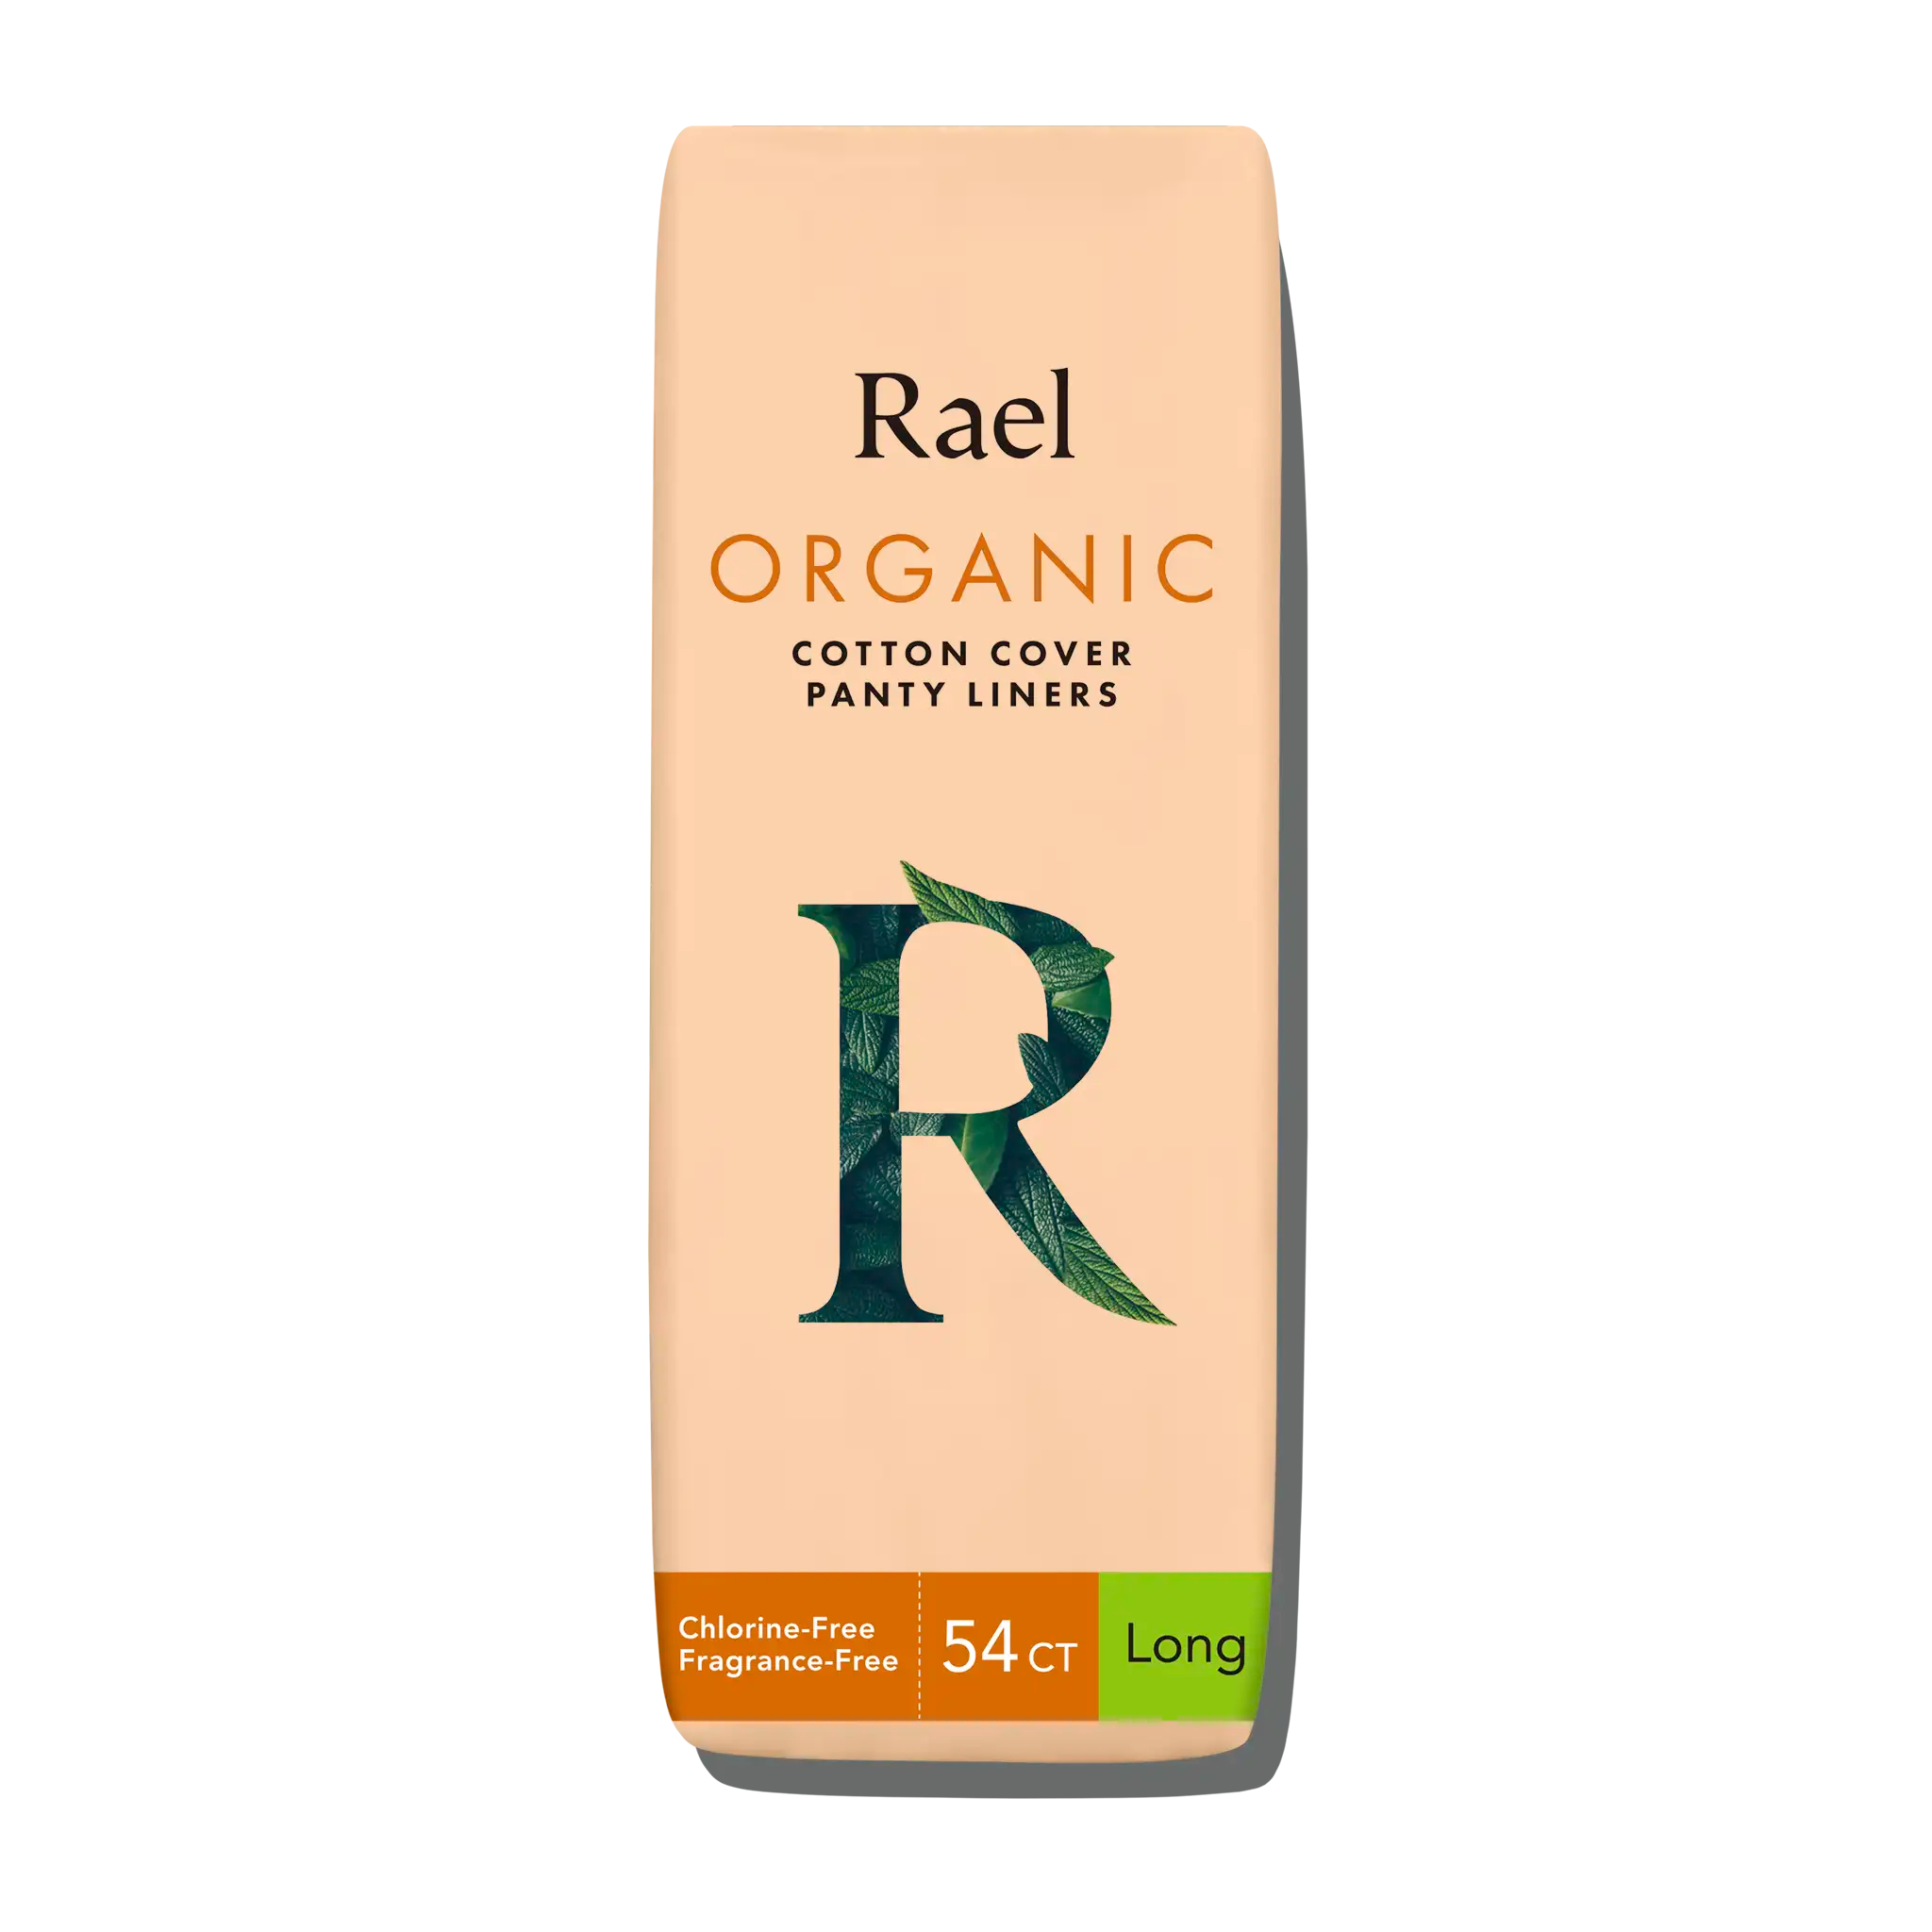 Rael Organic Cotton Cover Period Underwear L/XL 4 ct each pack (4